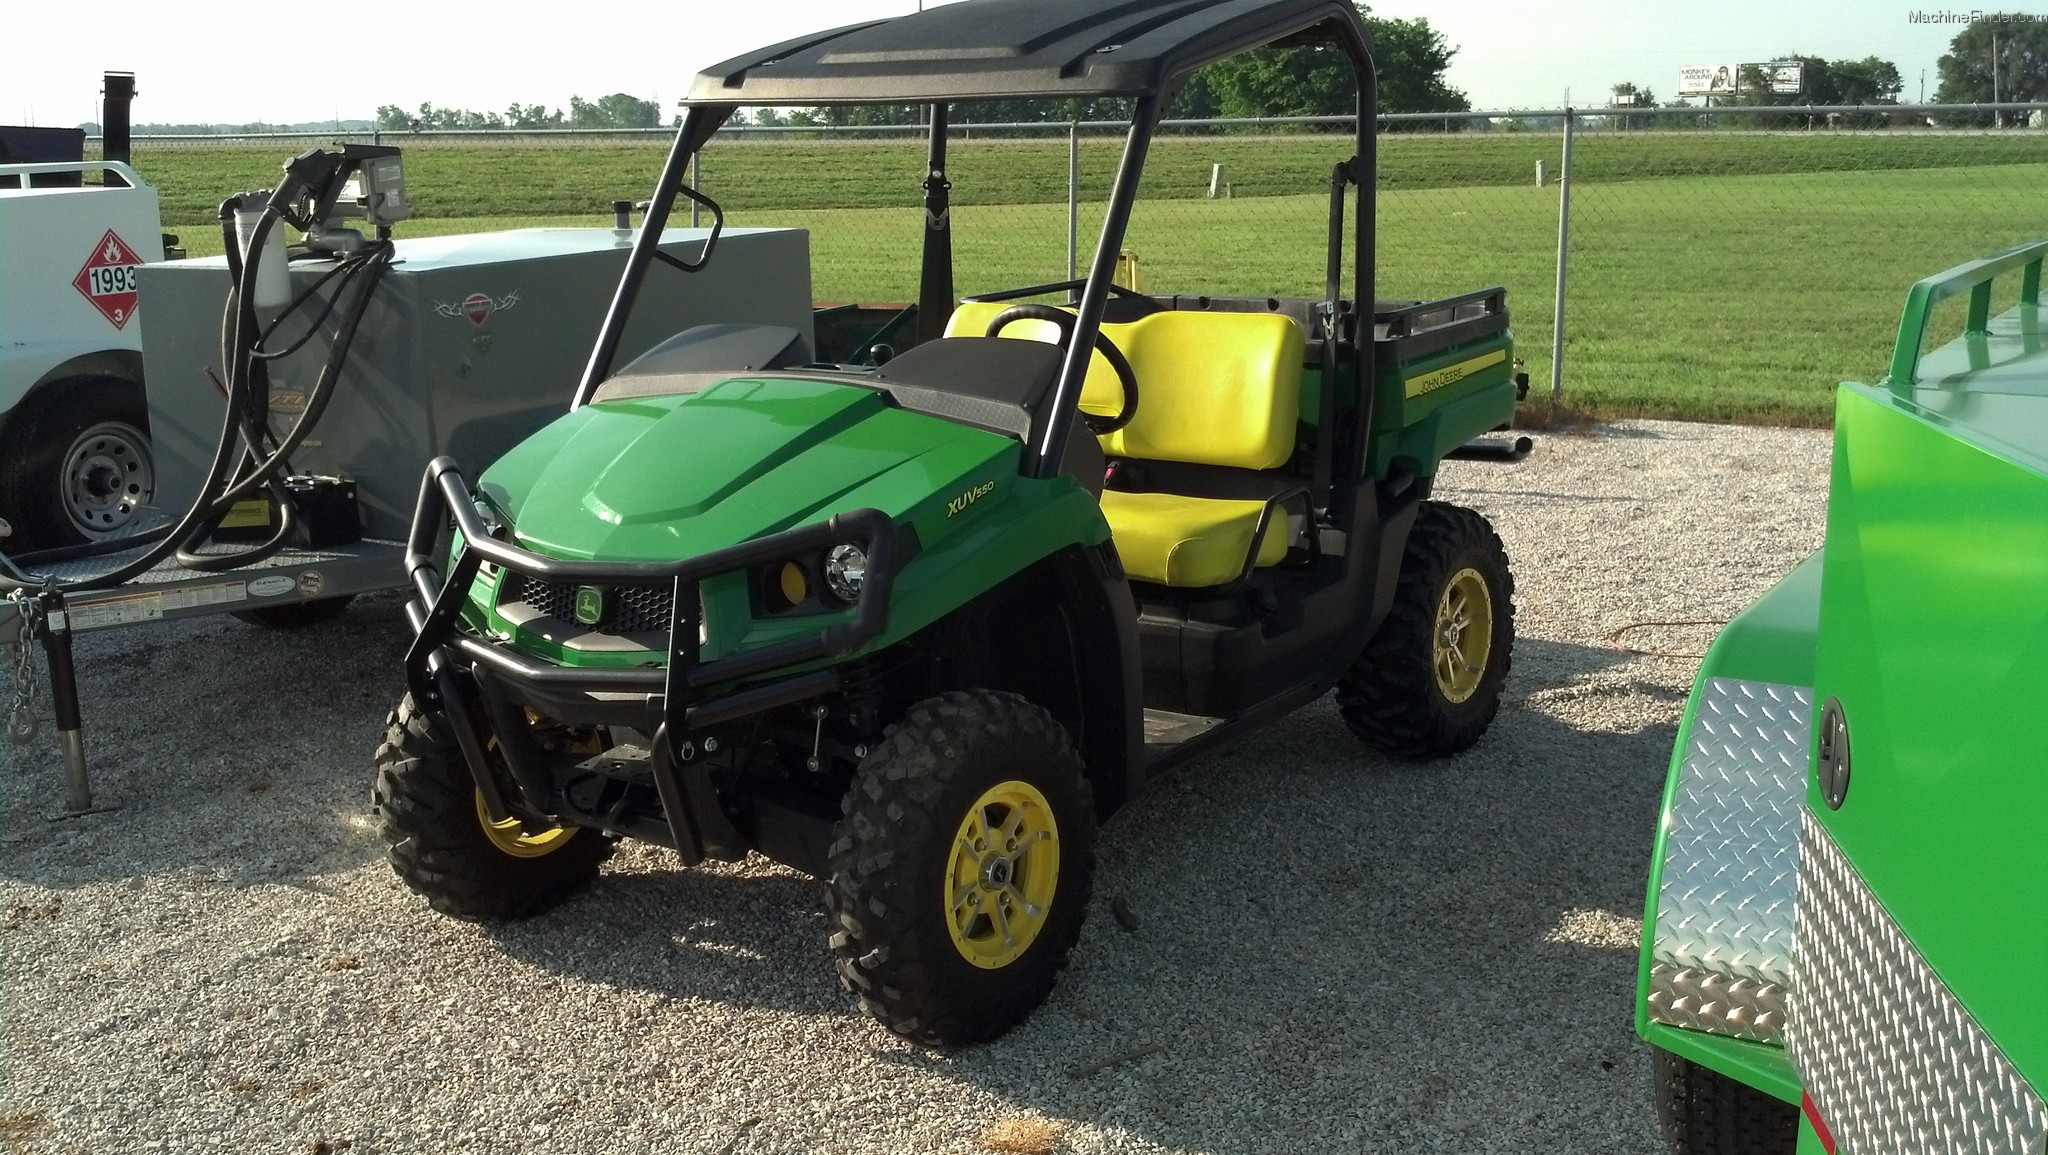 2013 John Deere XUV 550 ATV's and Gators - John Deere MachineFinder